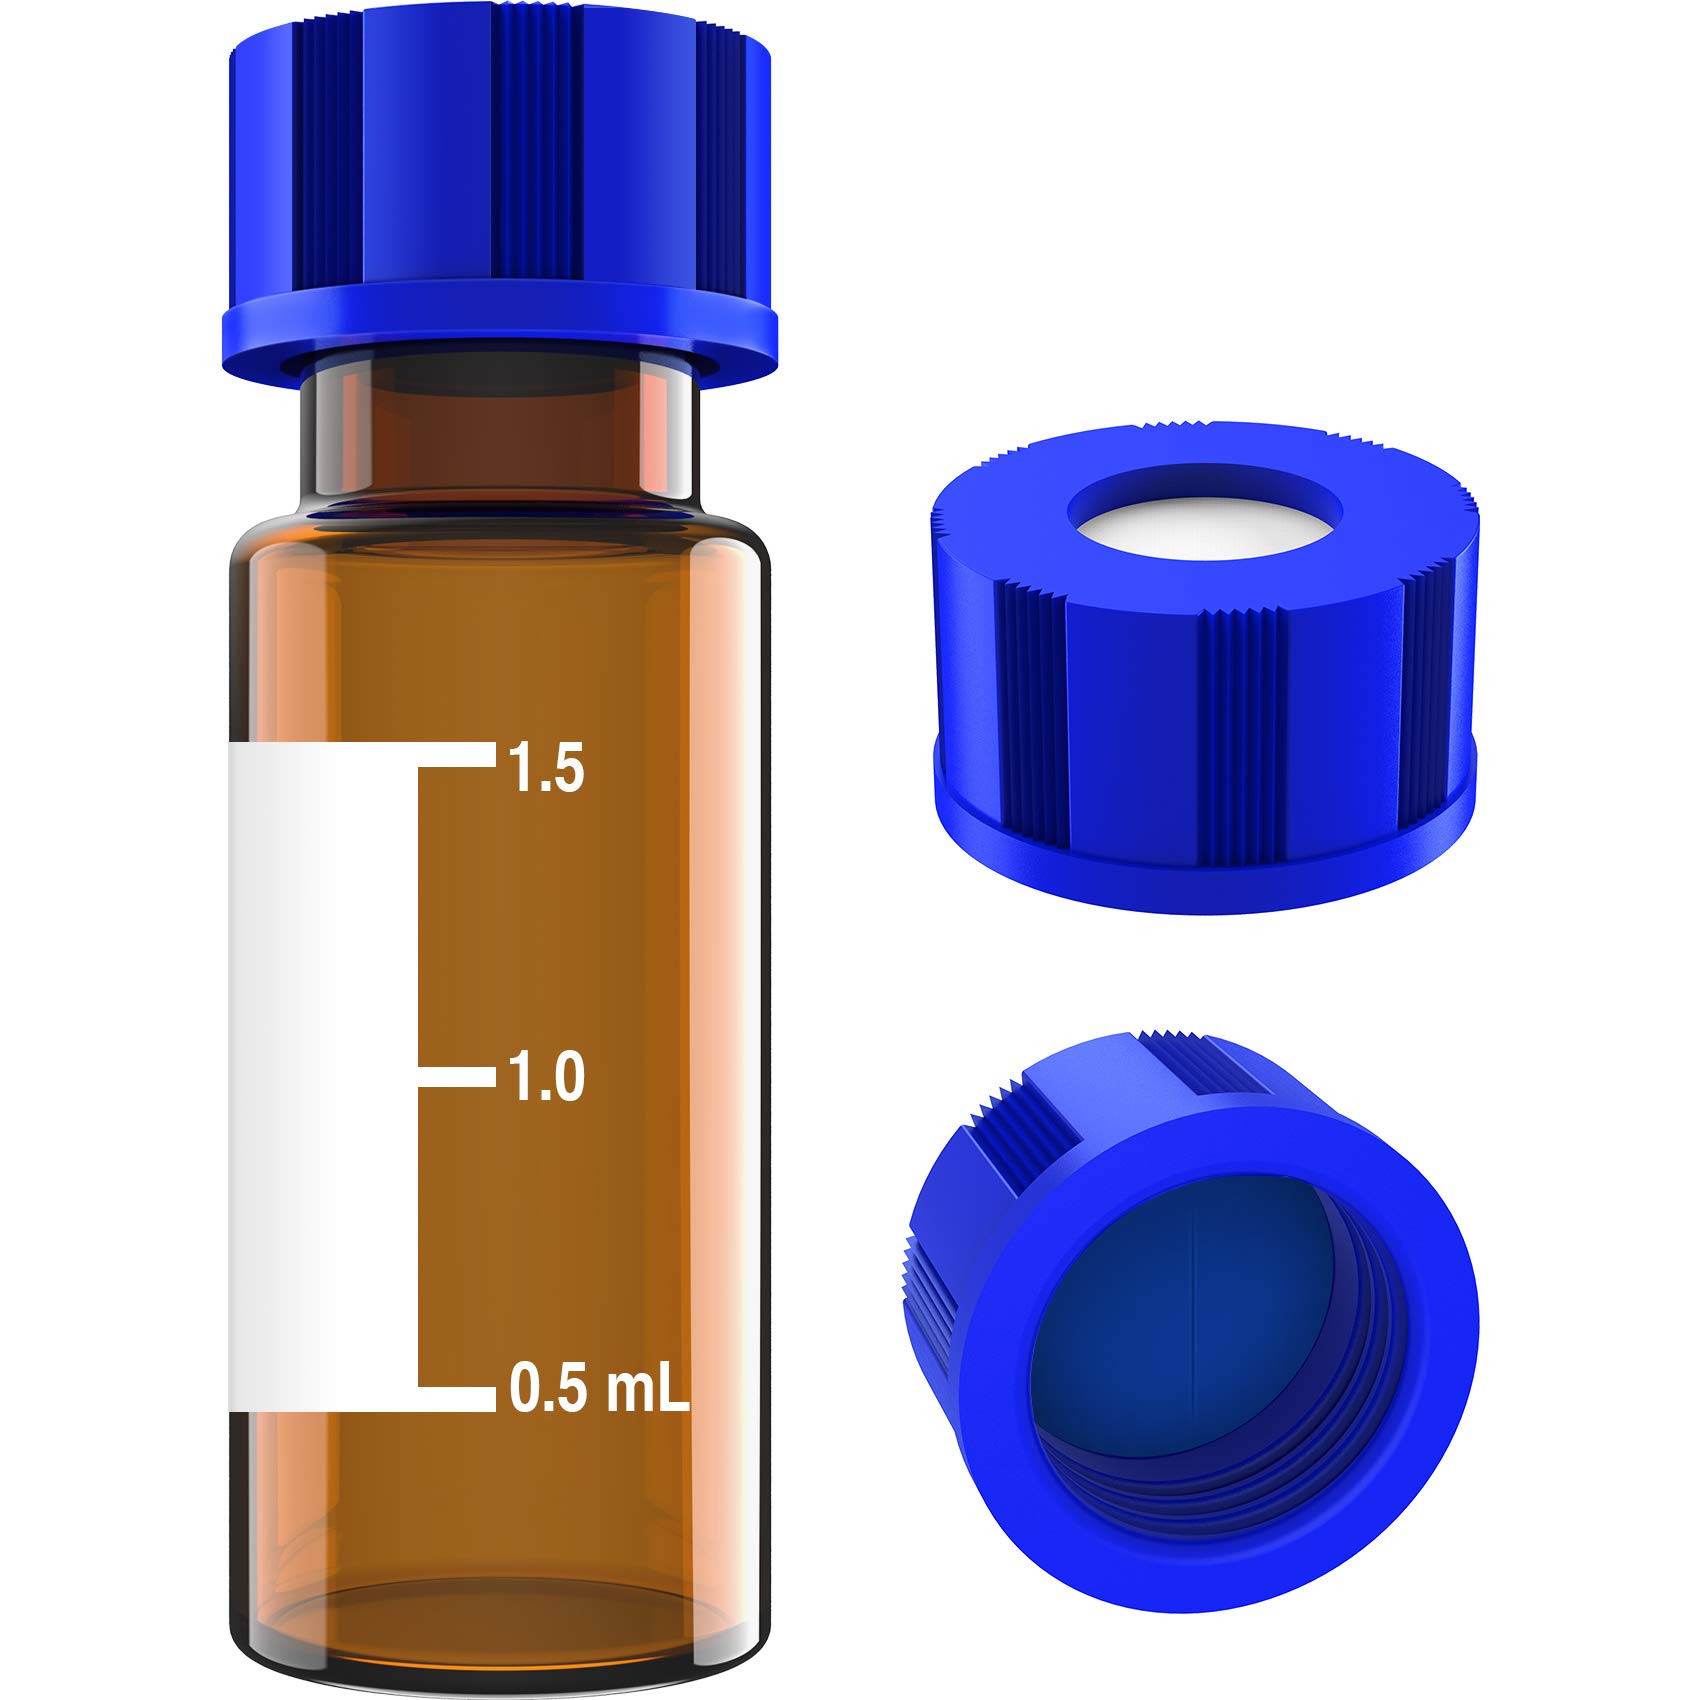 2 ml screw cap vials